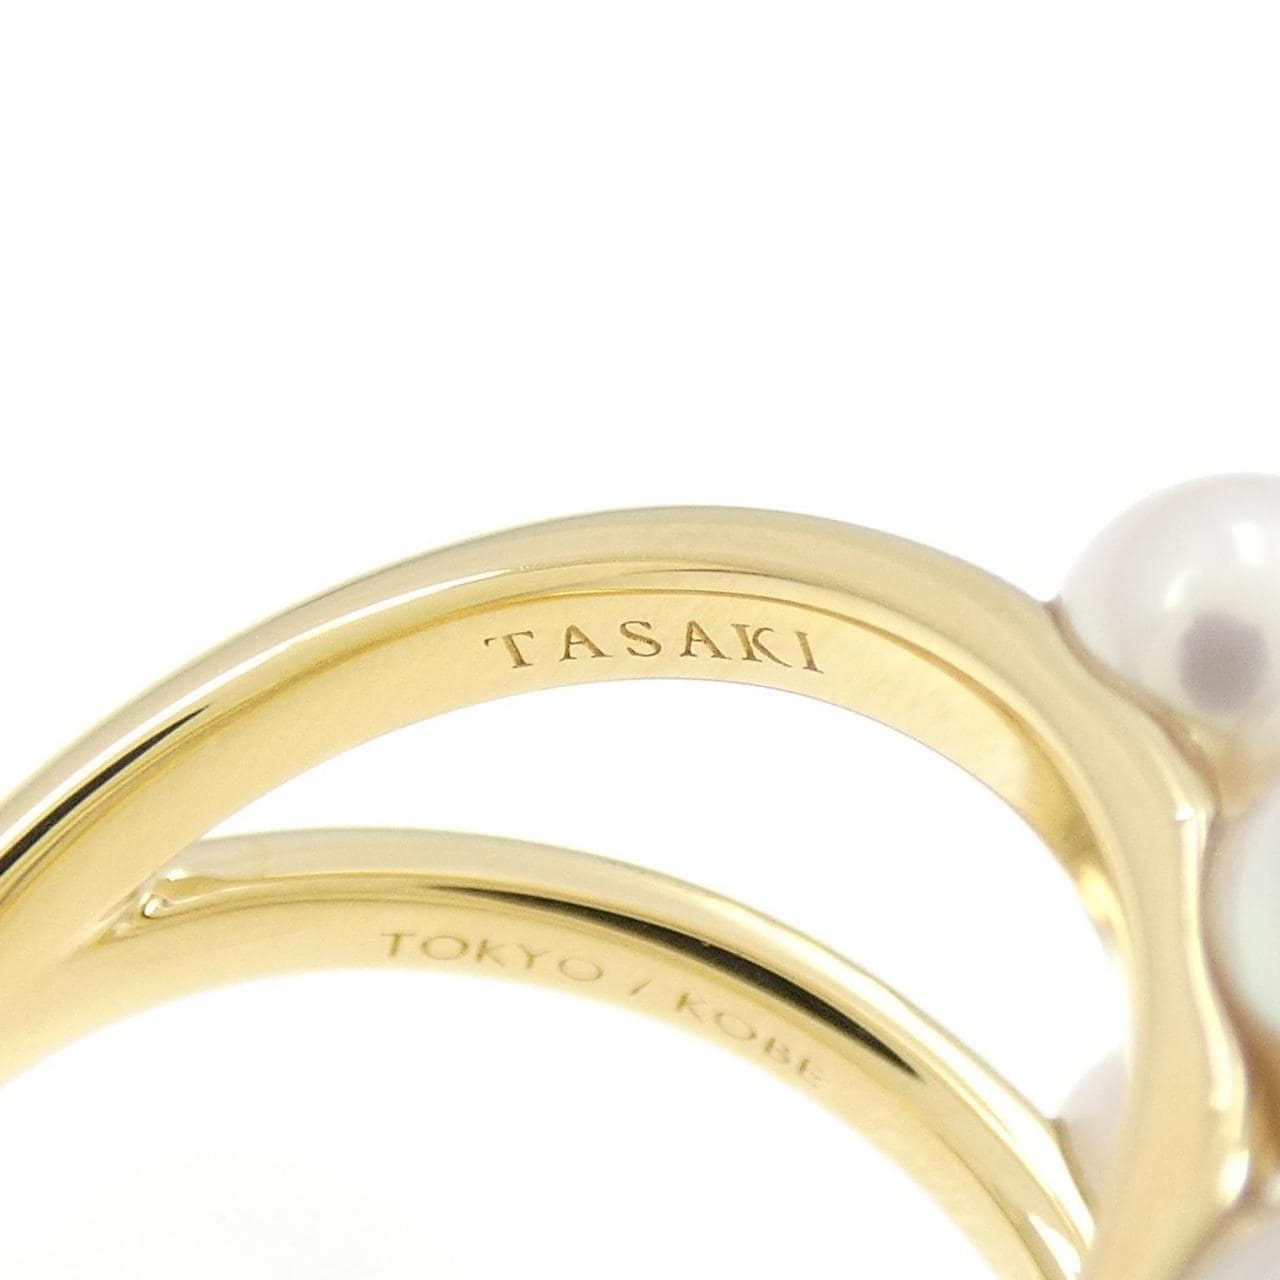 Tasaki Danger Signature Ring